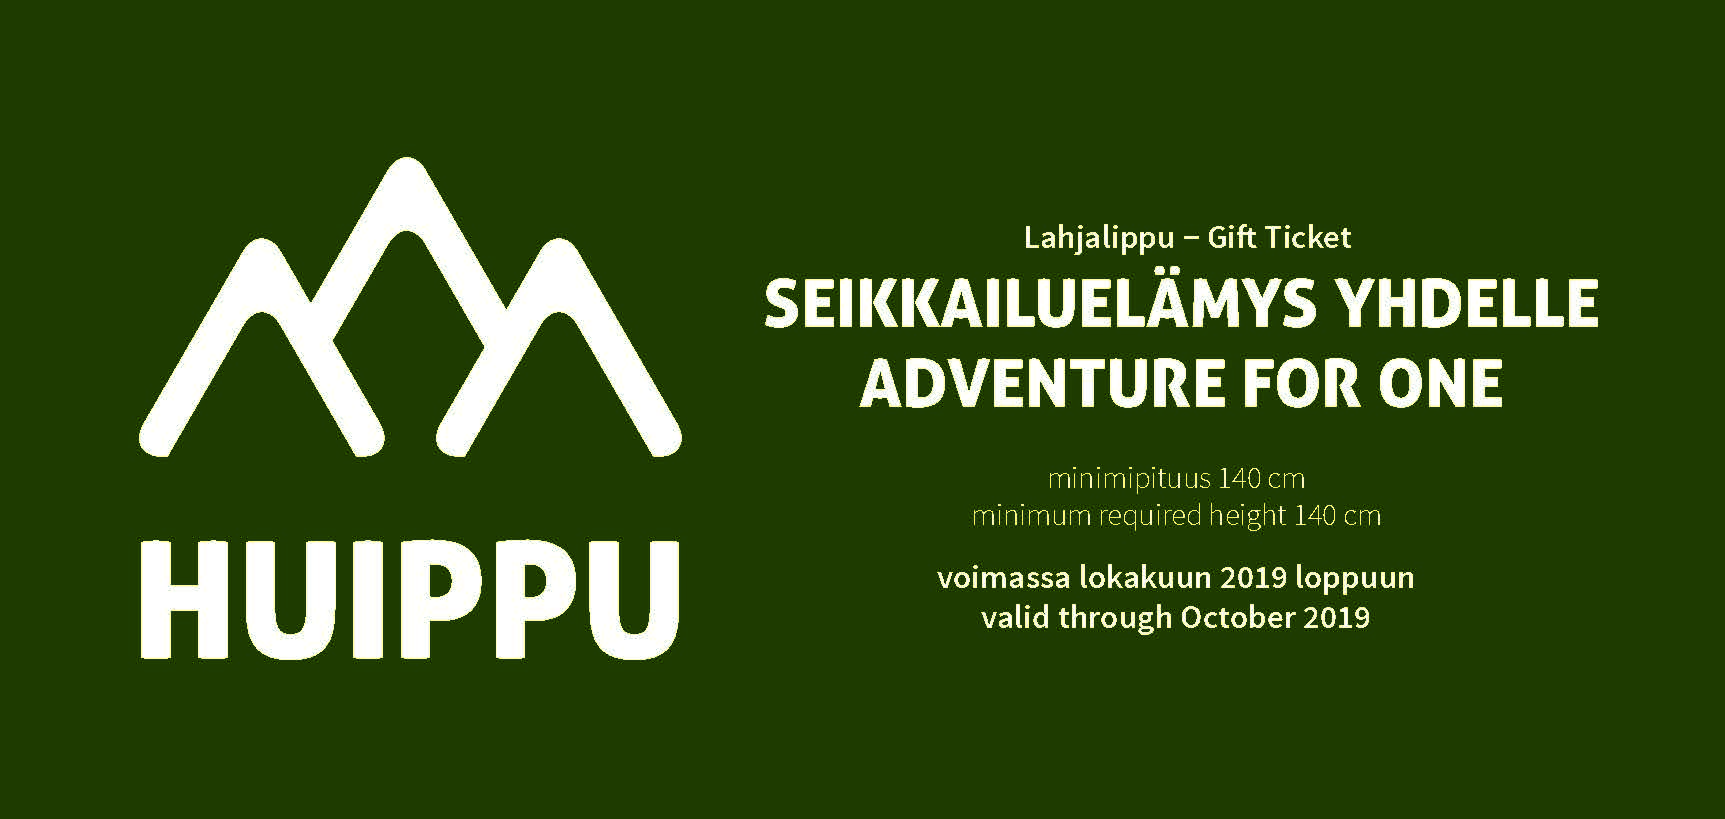 Treetop Adventure Huippu Gift Ticket for Adults is dark green.